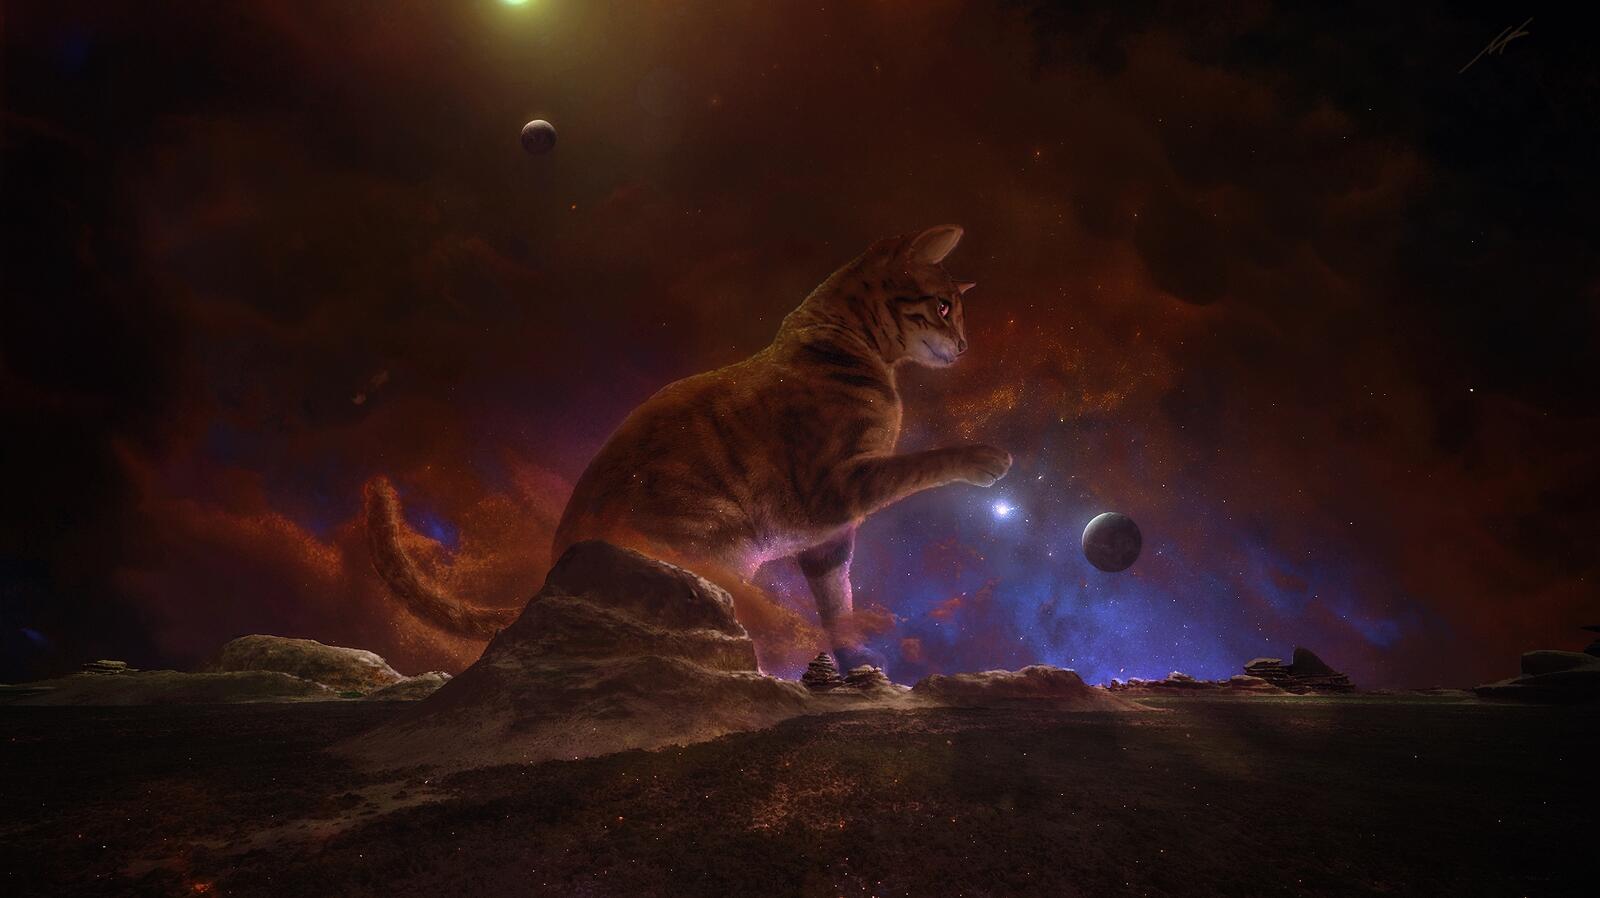 Wallpapers night planet cat on the desktop